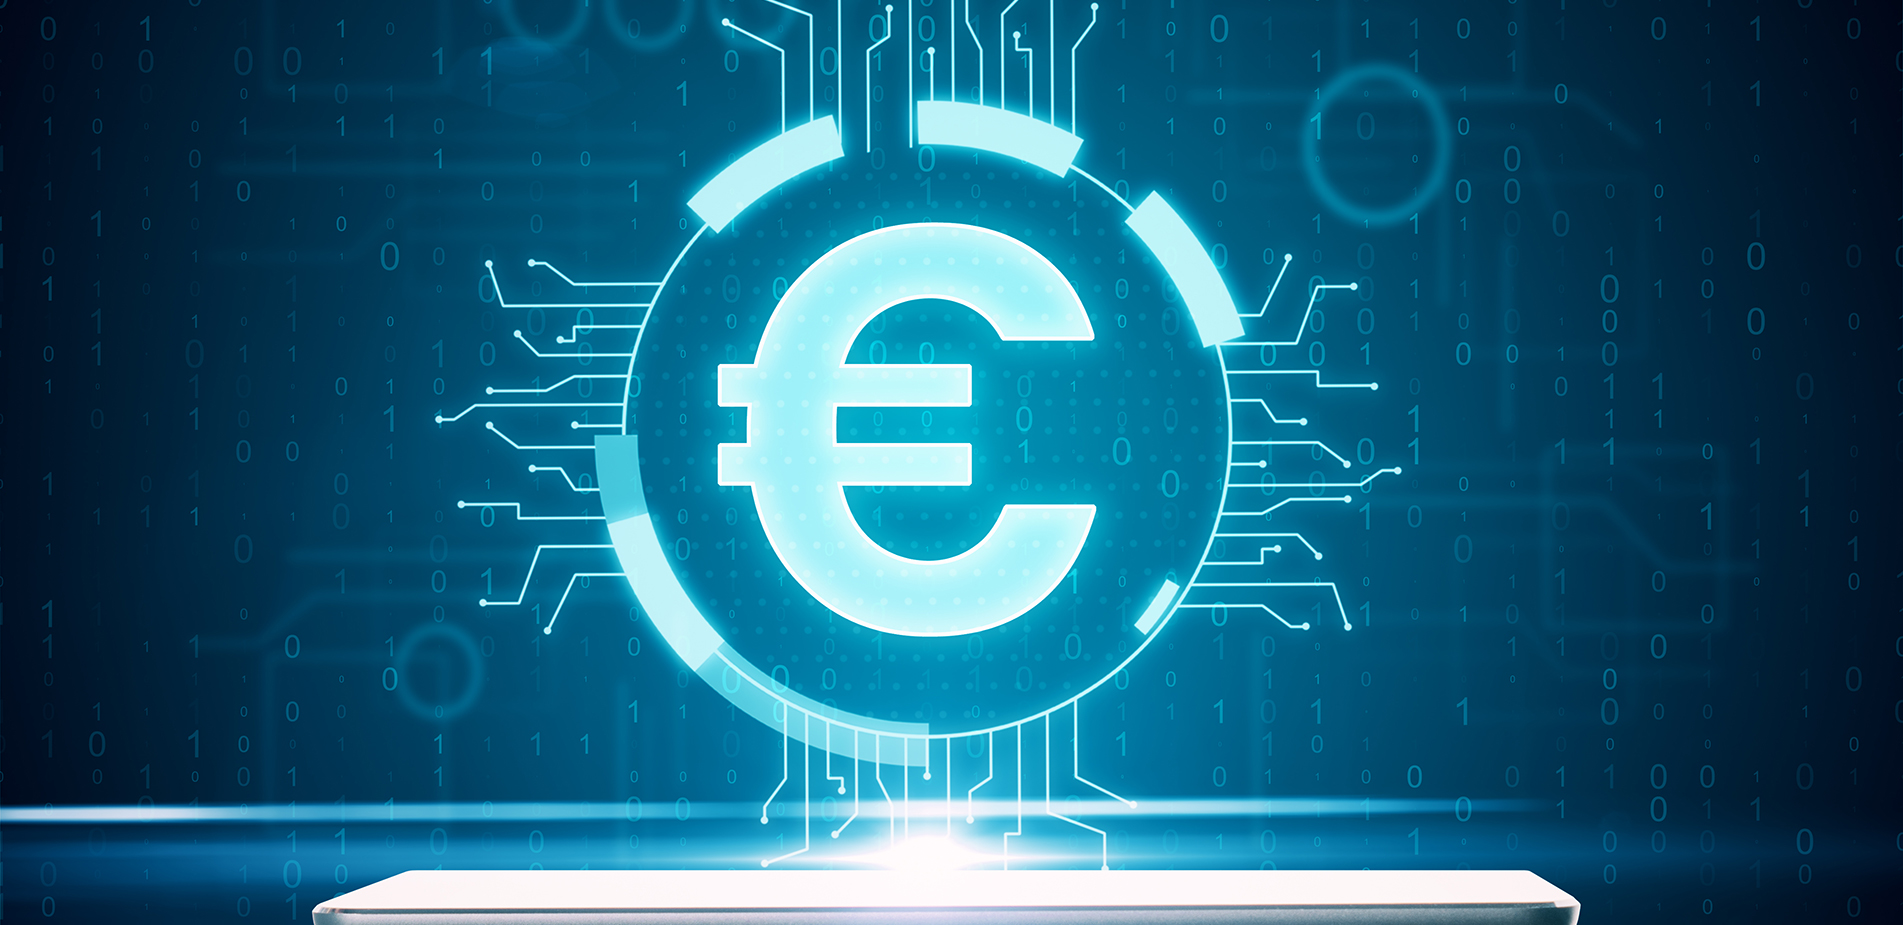 e – euro: Η Ευρώπη σχεδιάζει το δικό της ψηφιακό νόμισμα και «ο διάβολος κρύβεται στις λεπτομέρειες»